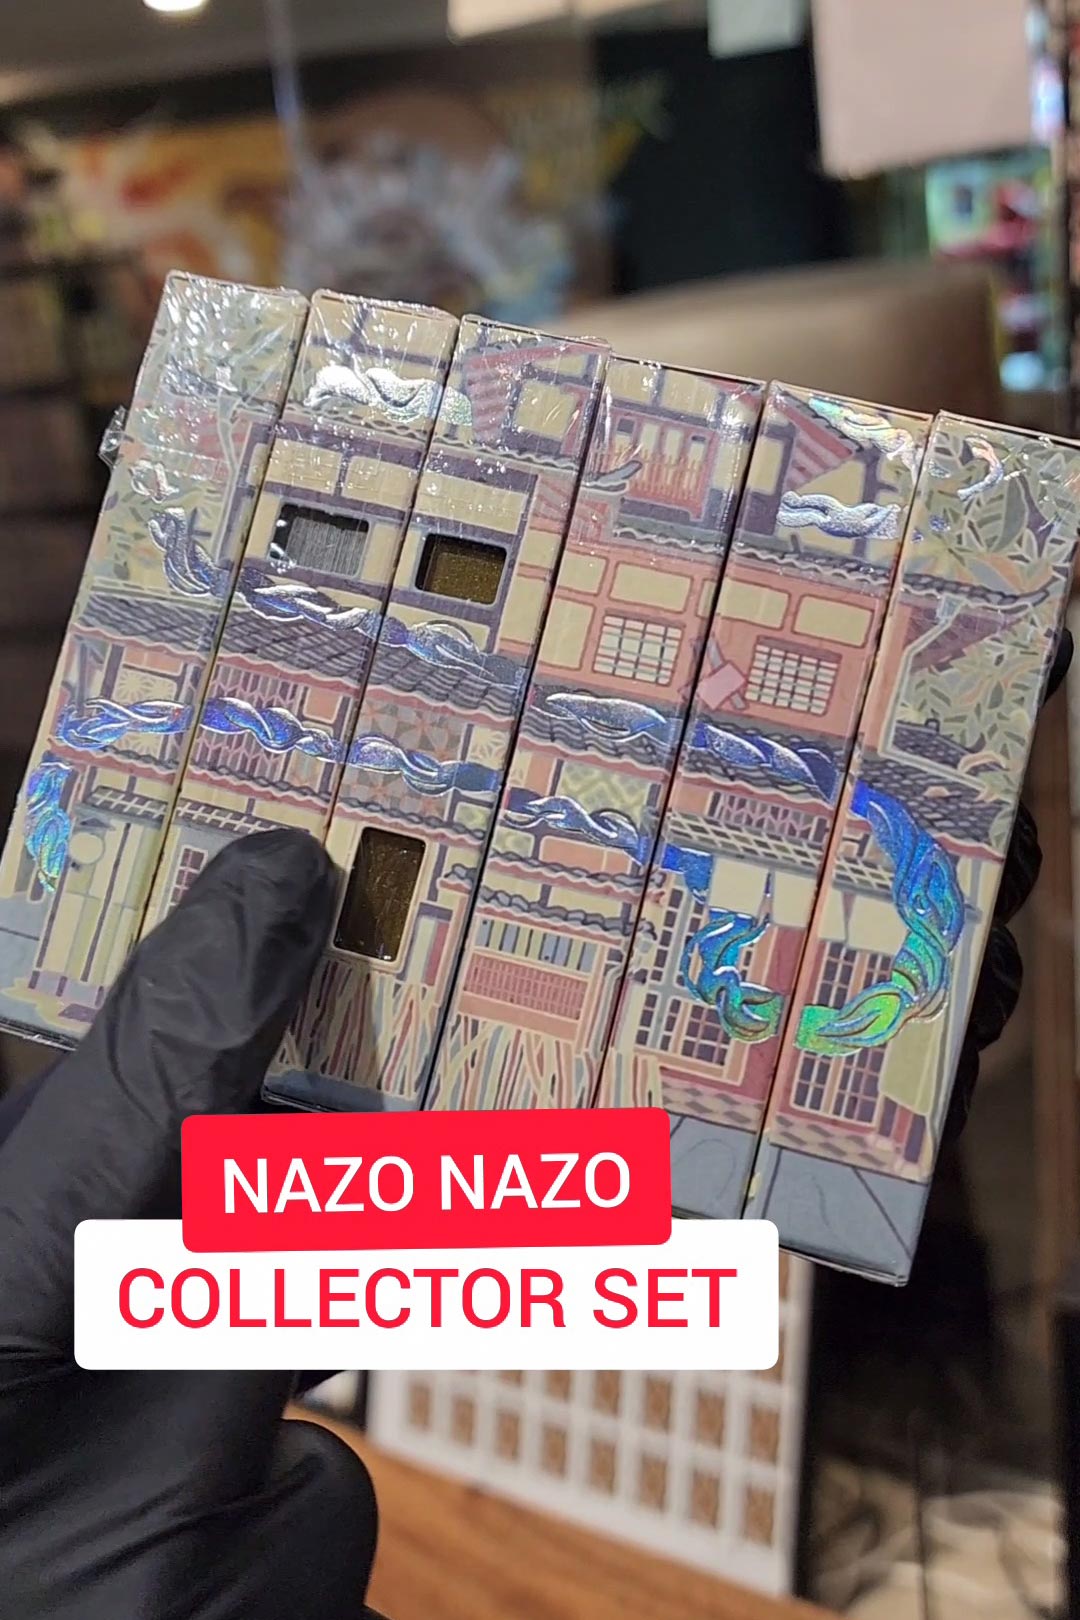 Nazo Nazo Collector Set!